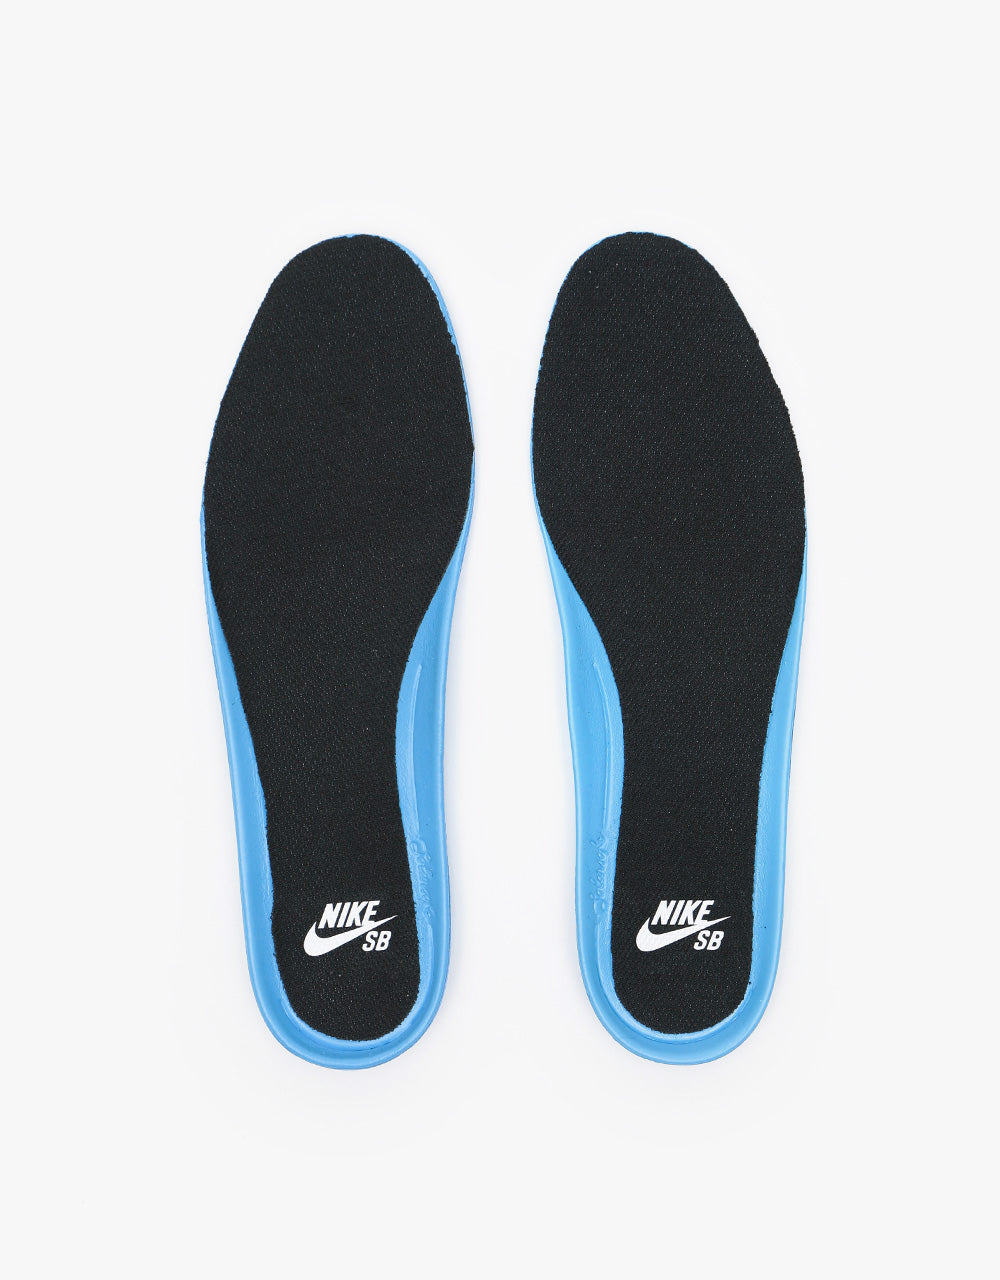 Nike SB Chron 2 Skate Shoes - Black/White-Black